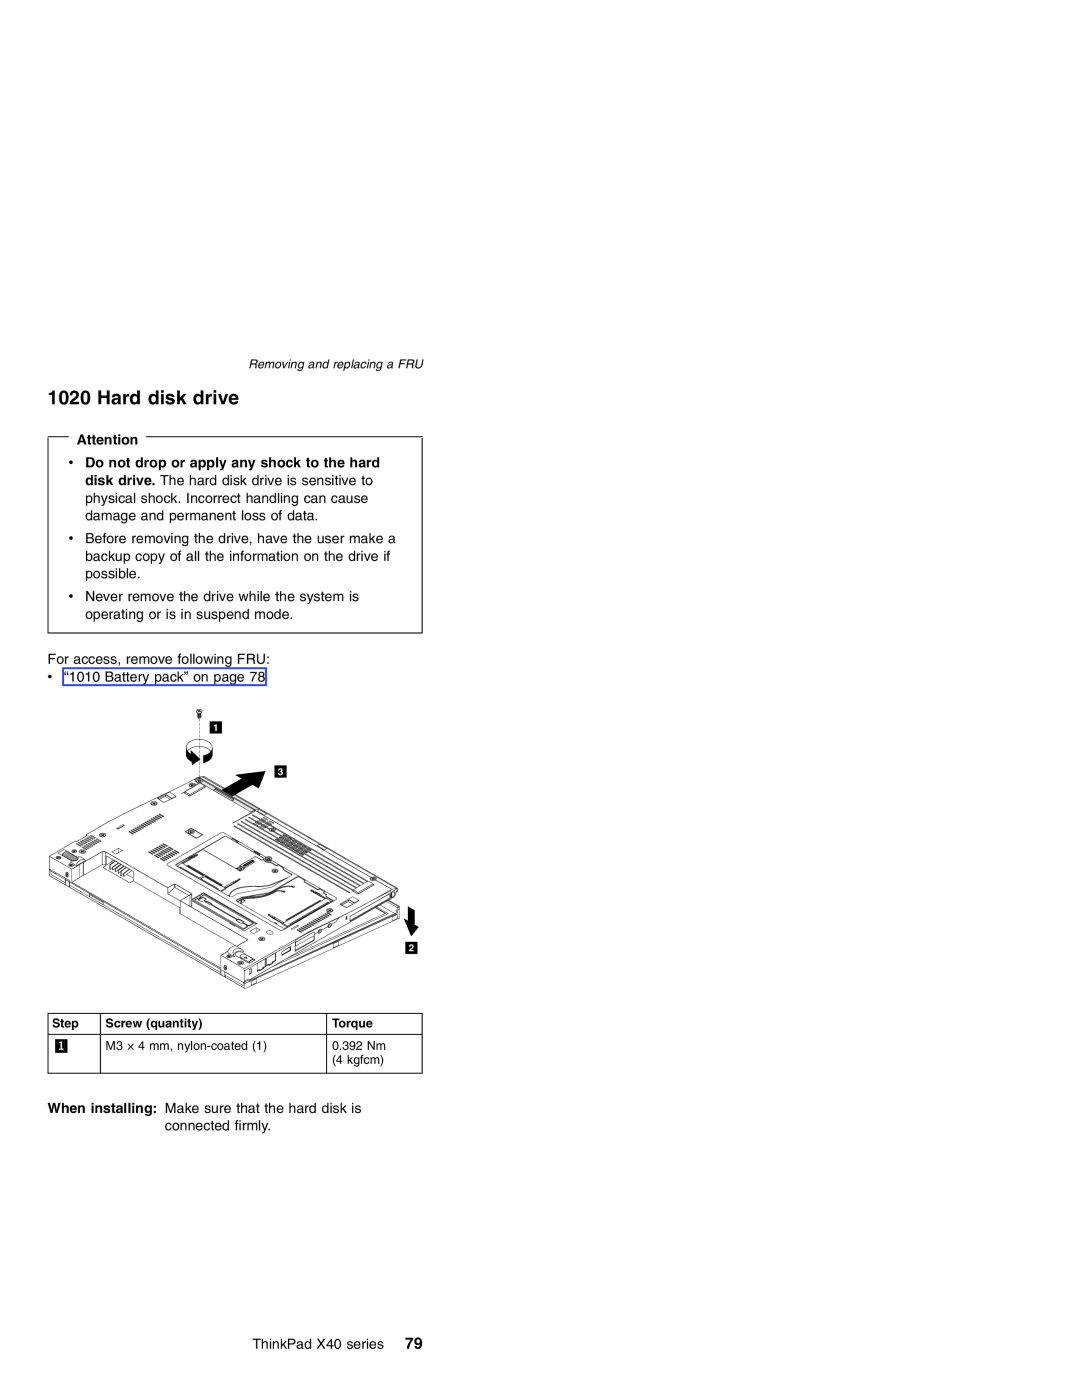 Lenovo MT 2369 manual Hard disk drive, Step, Screw quantity, Torque 